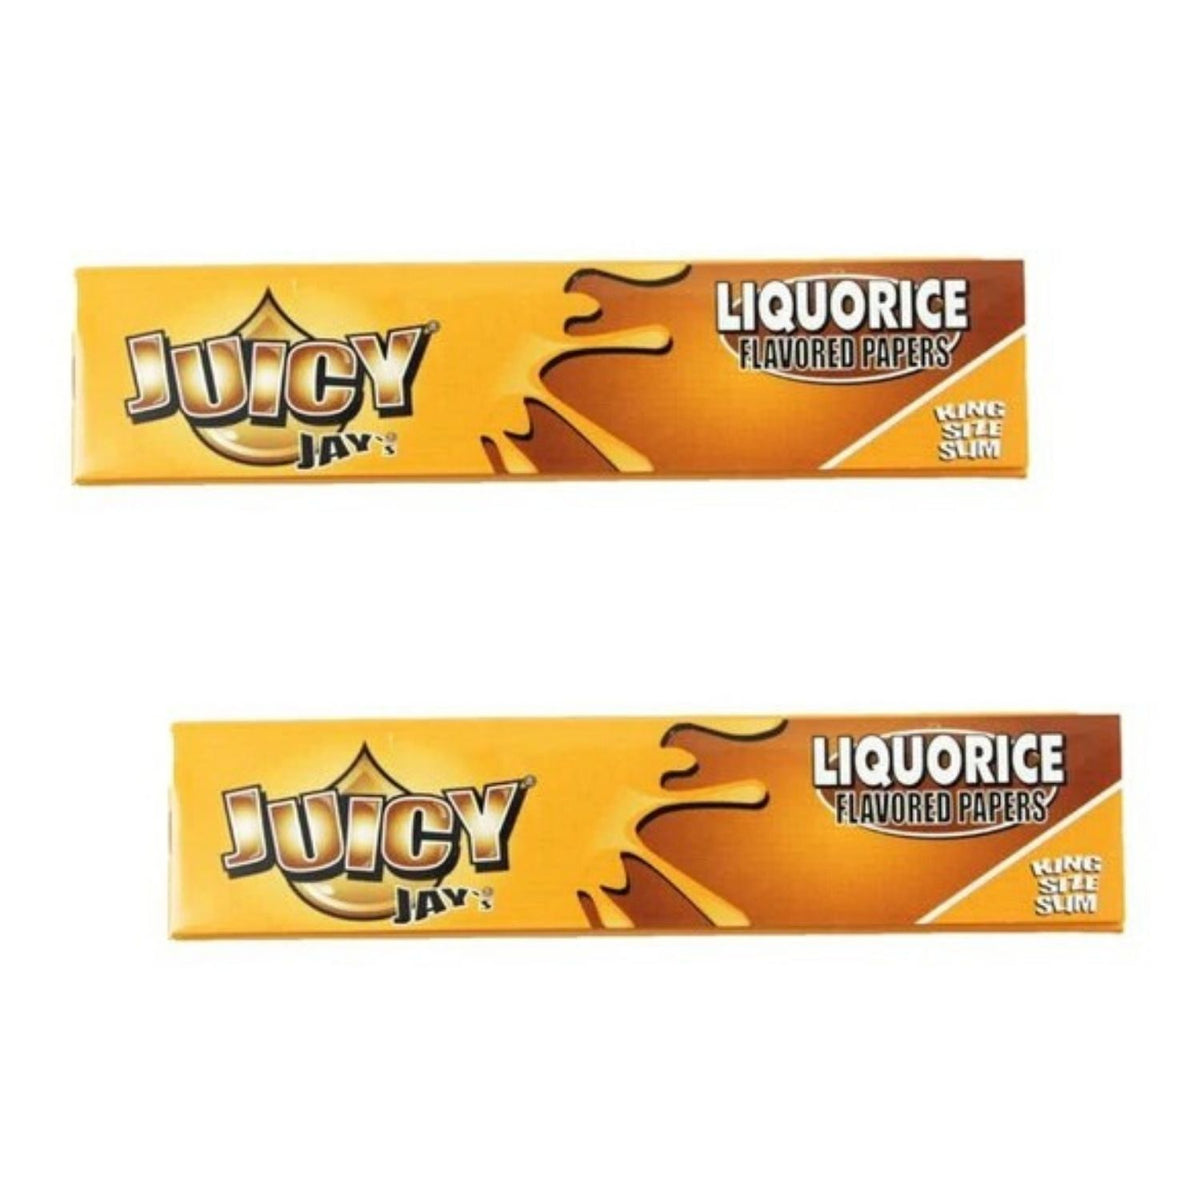 Juicy Jay Rolling Papers - Liquorice Flavor - KSS